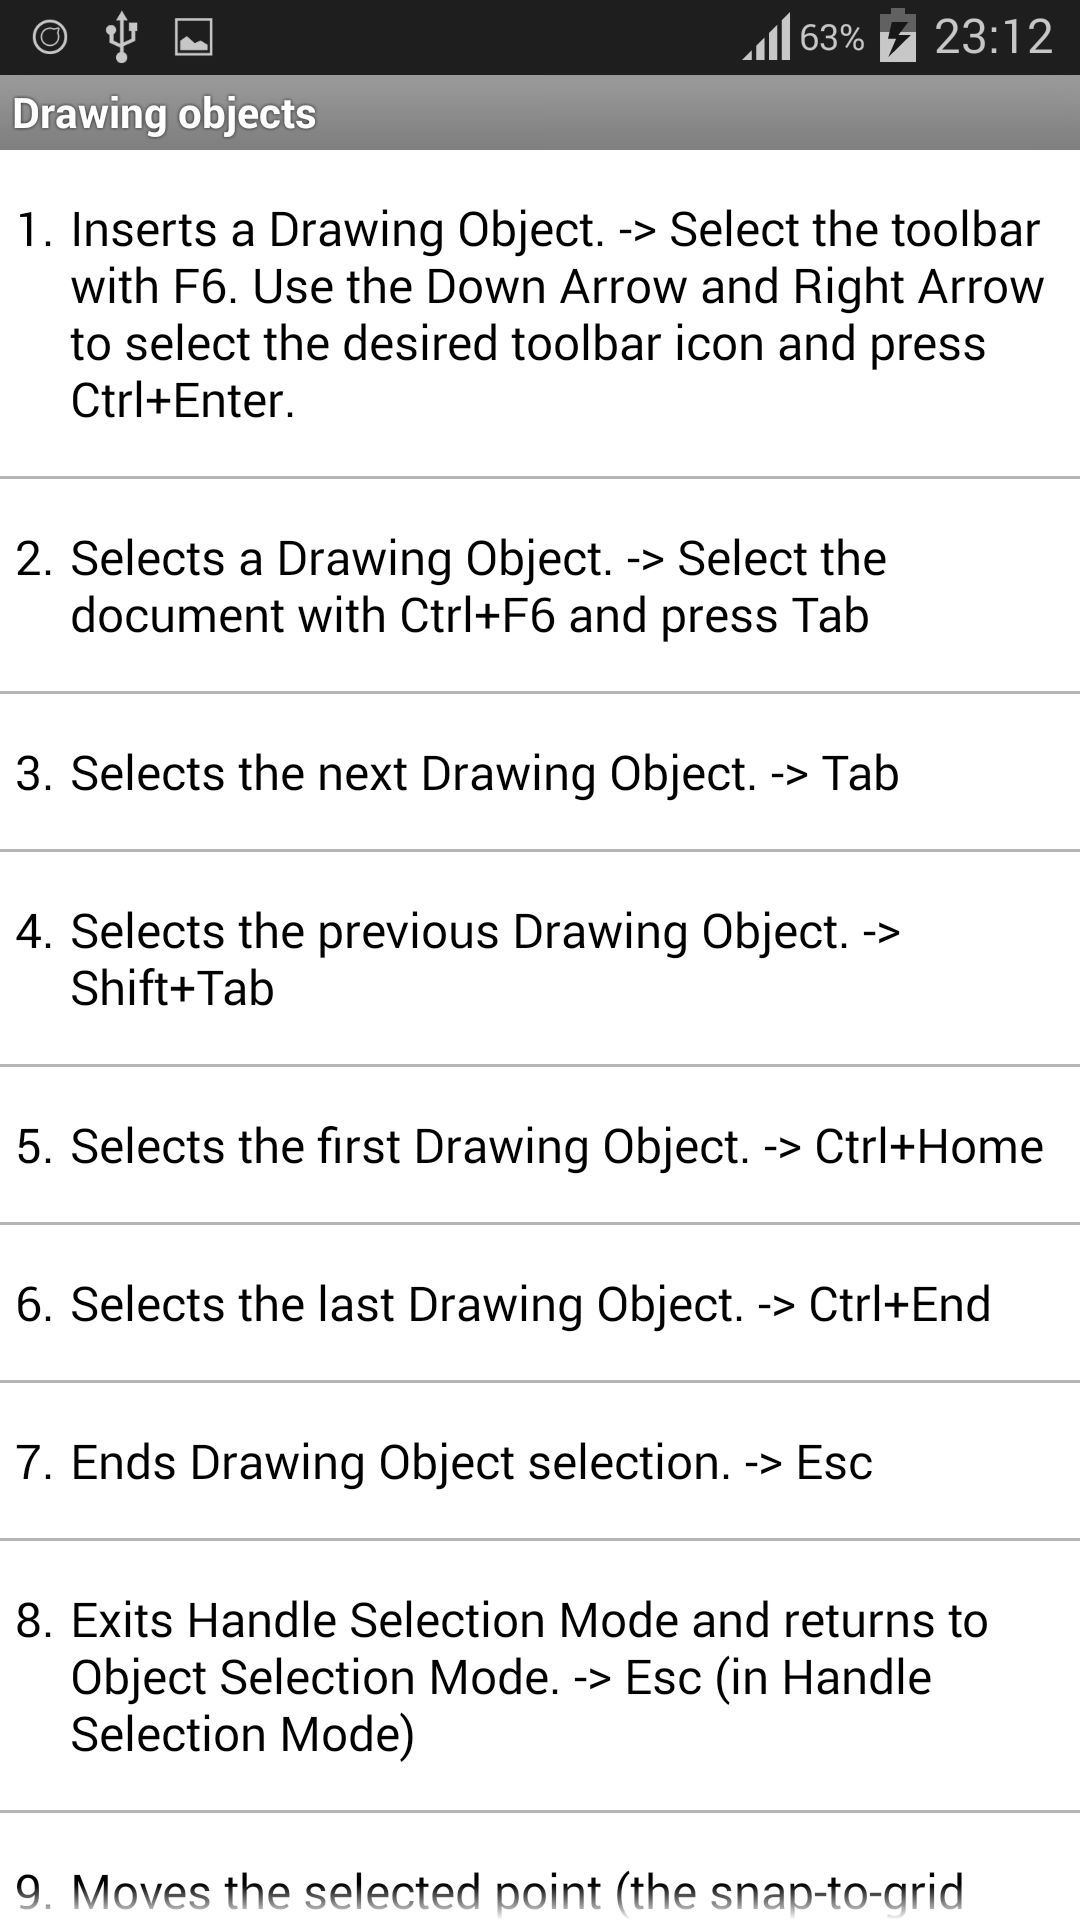 OpenOffice Shortcuts